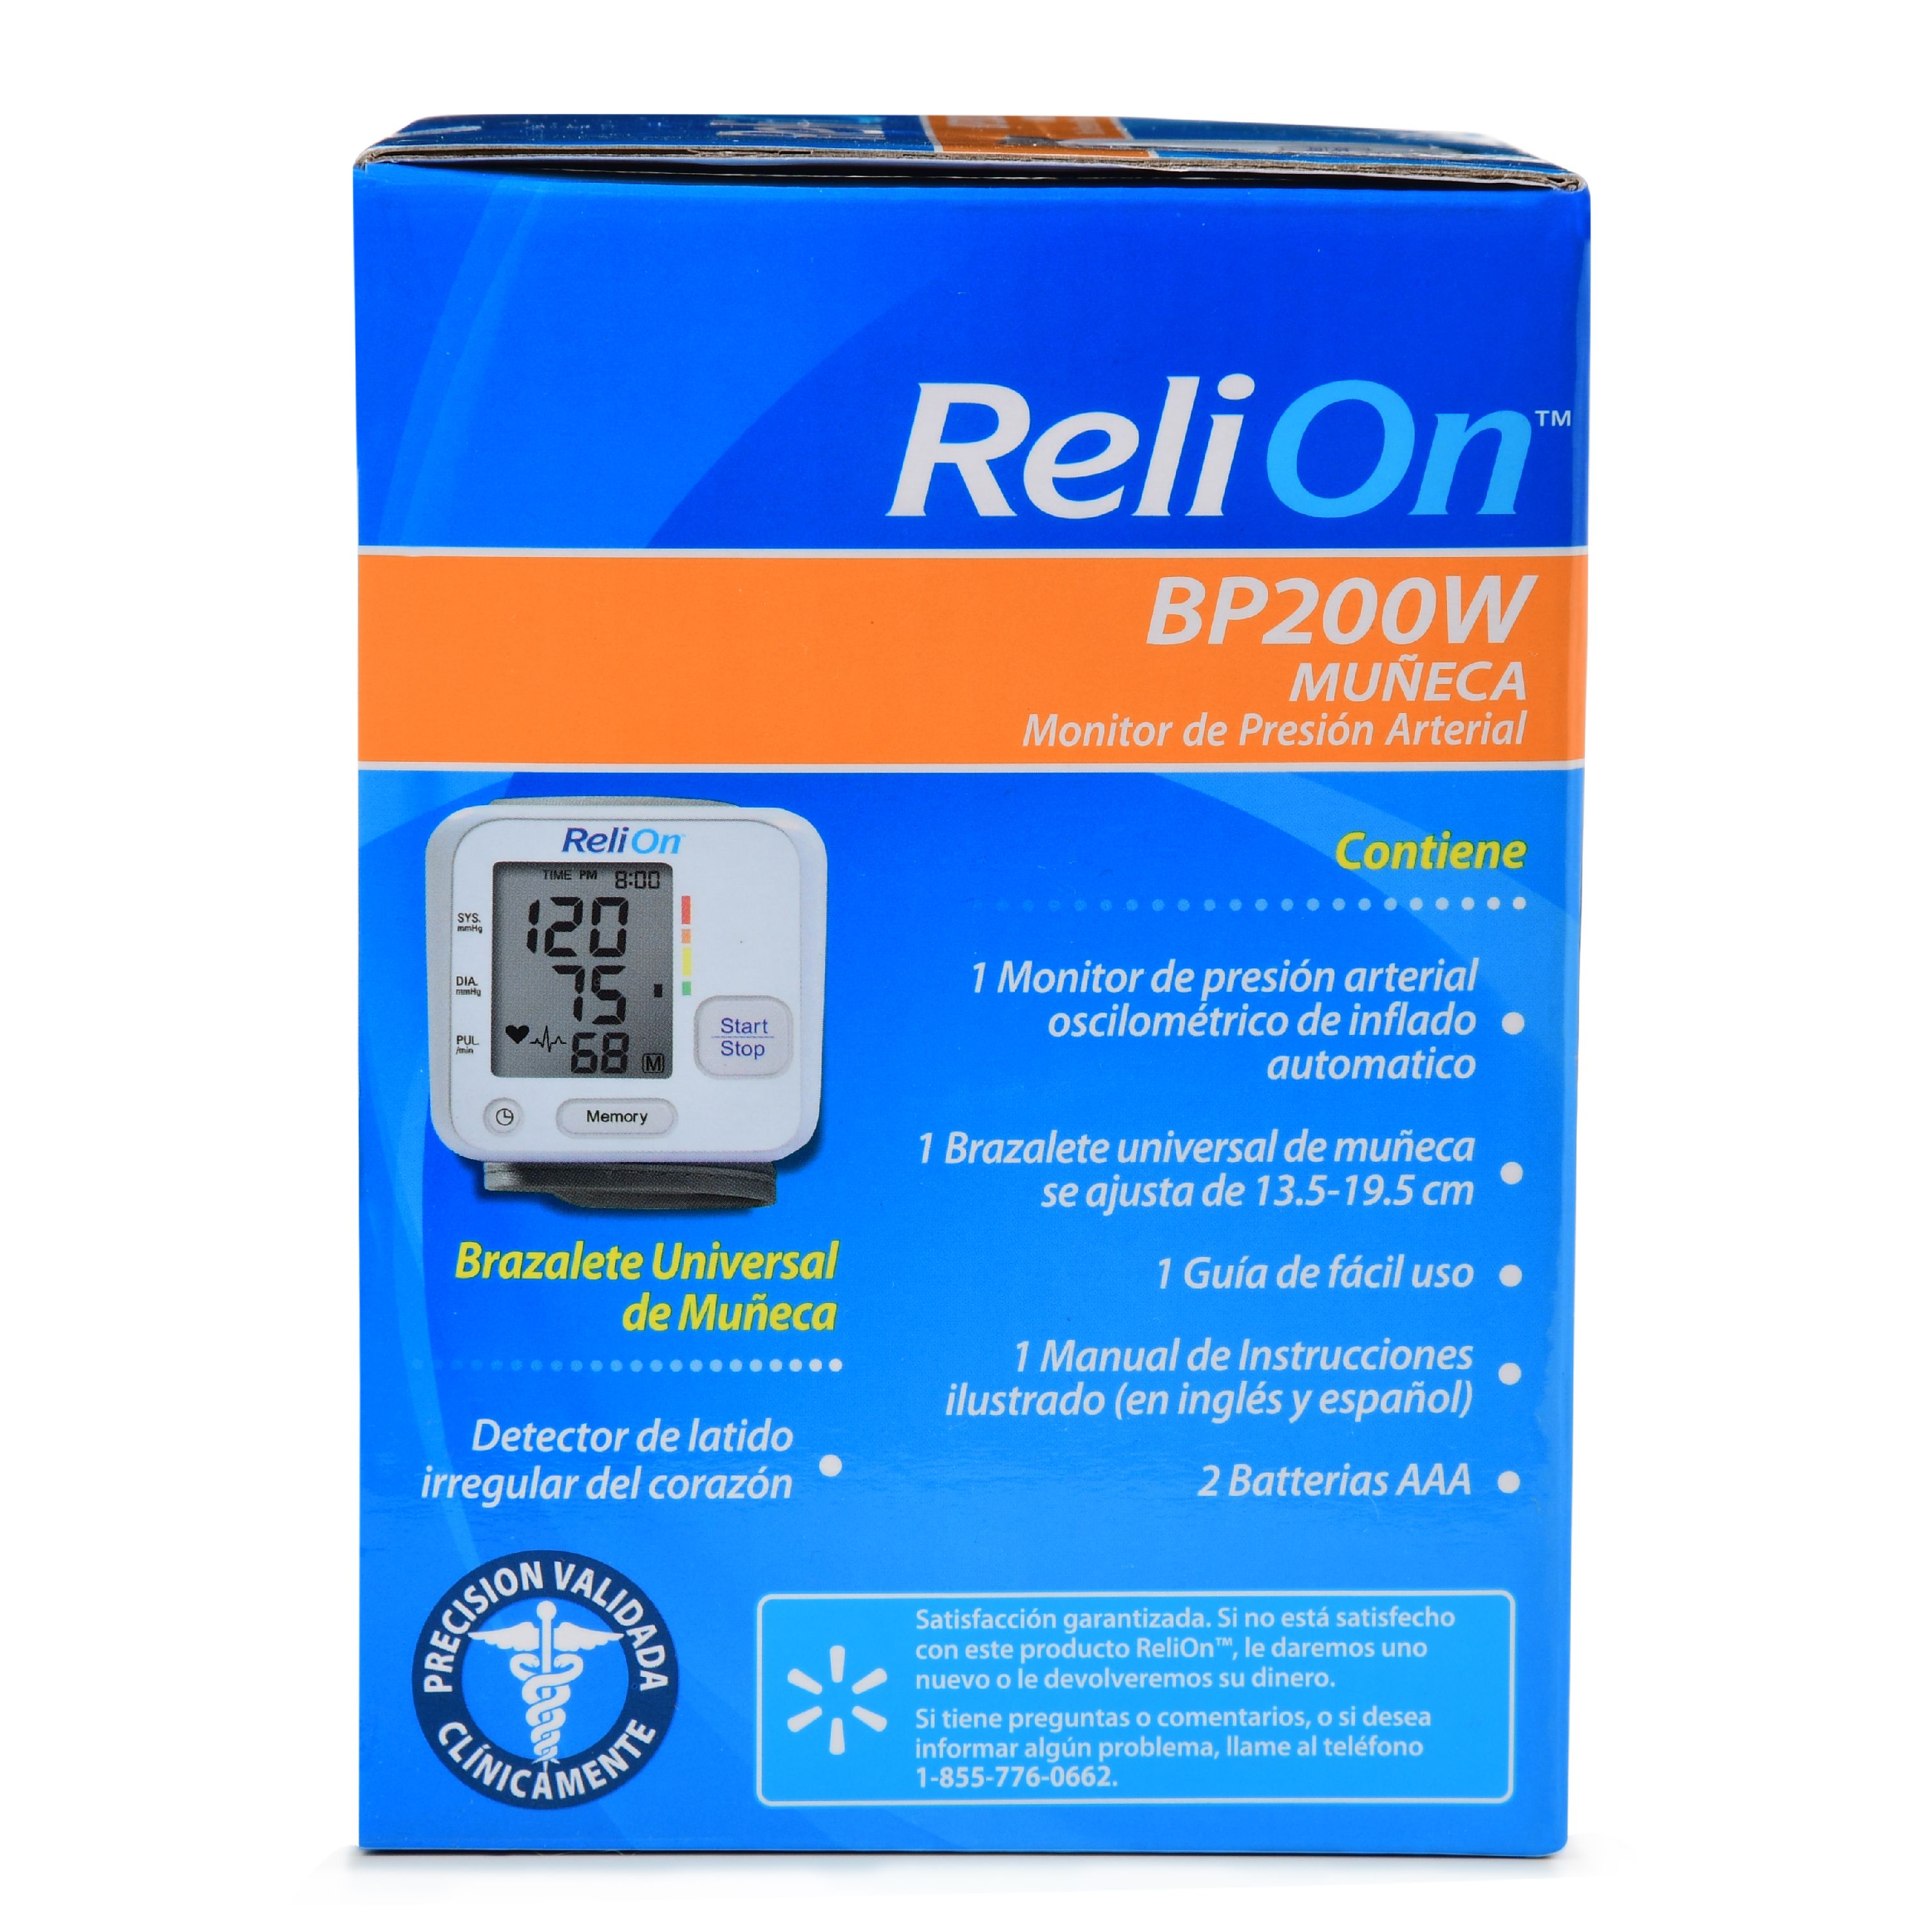 ReliOn BP200W Wrist Blood Pressure Monitor - image 3 of 9